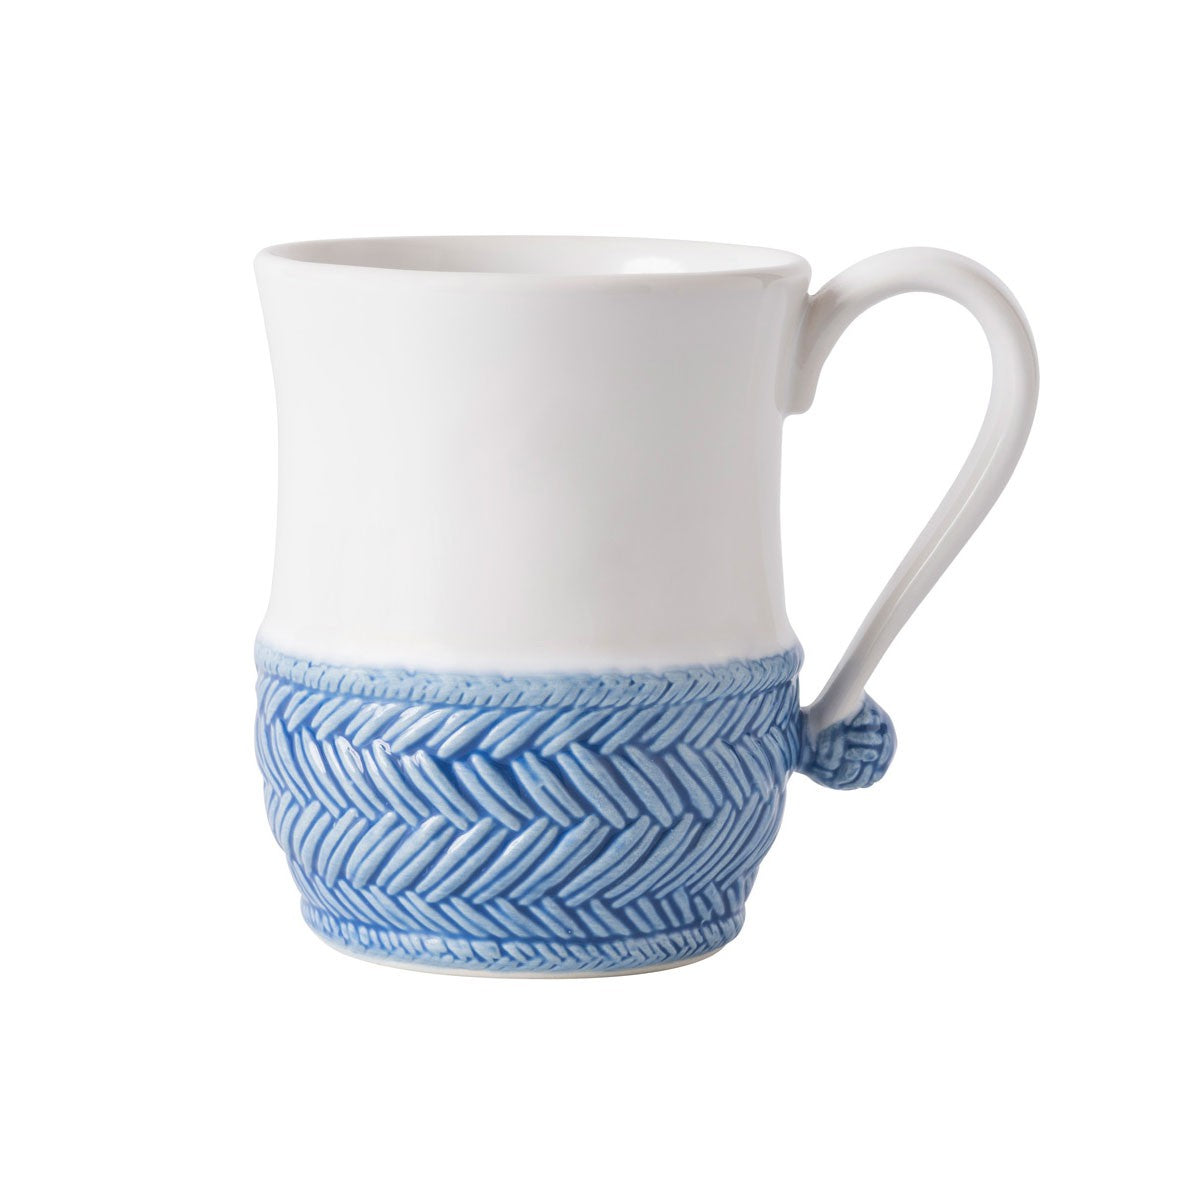 Le Panier White & Delft Blue Mug